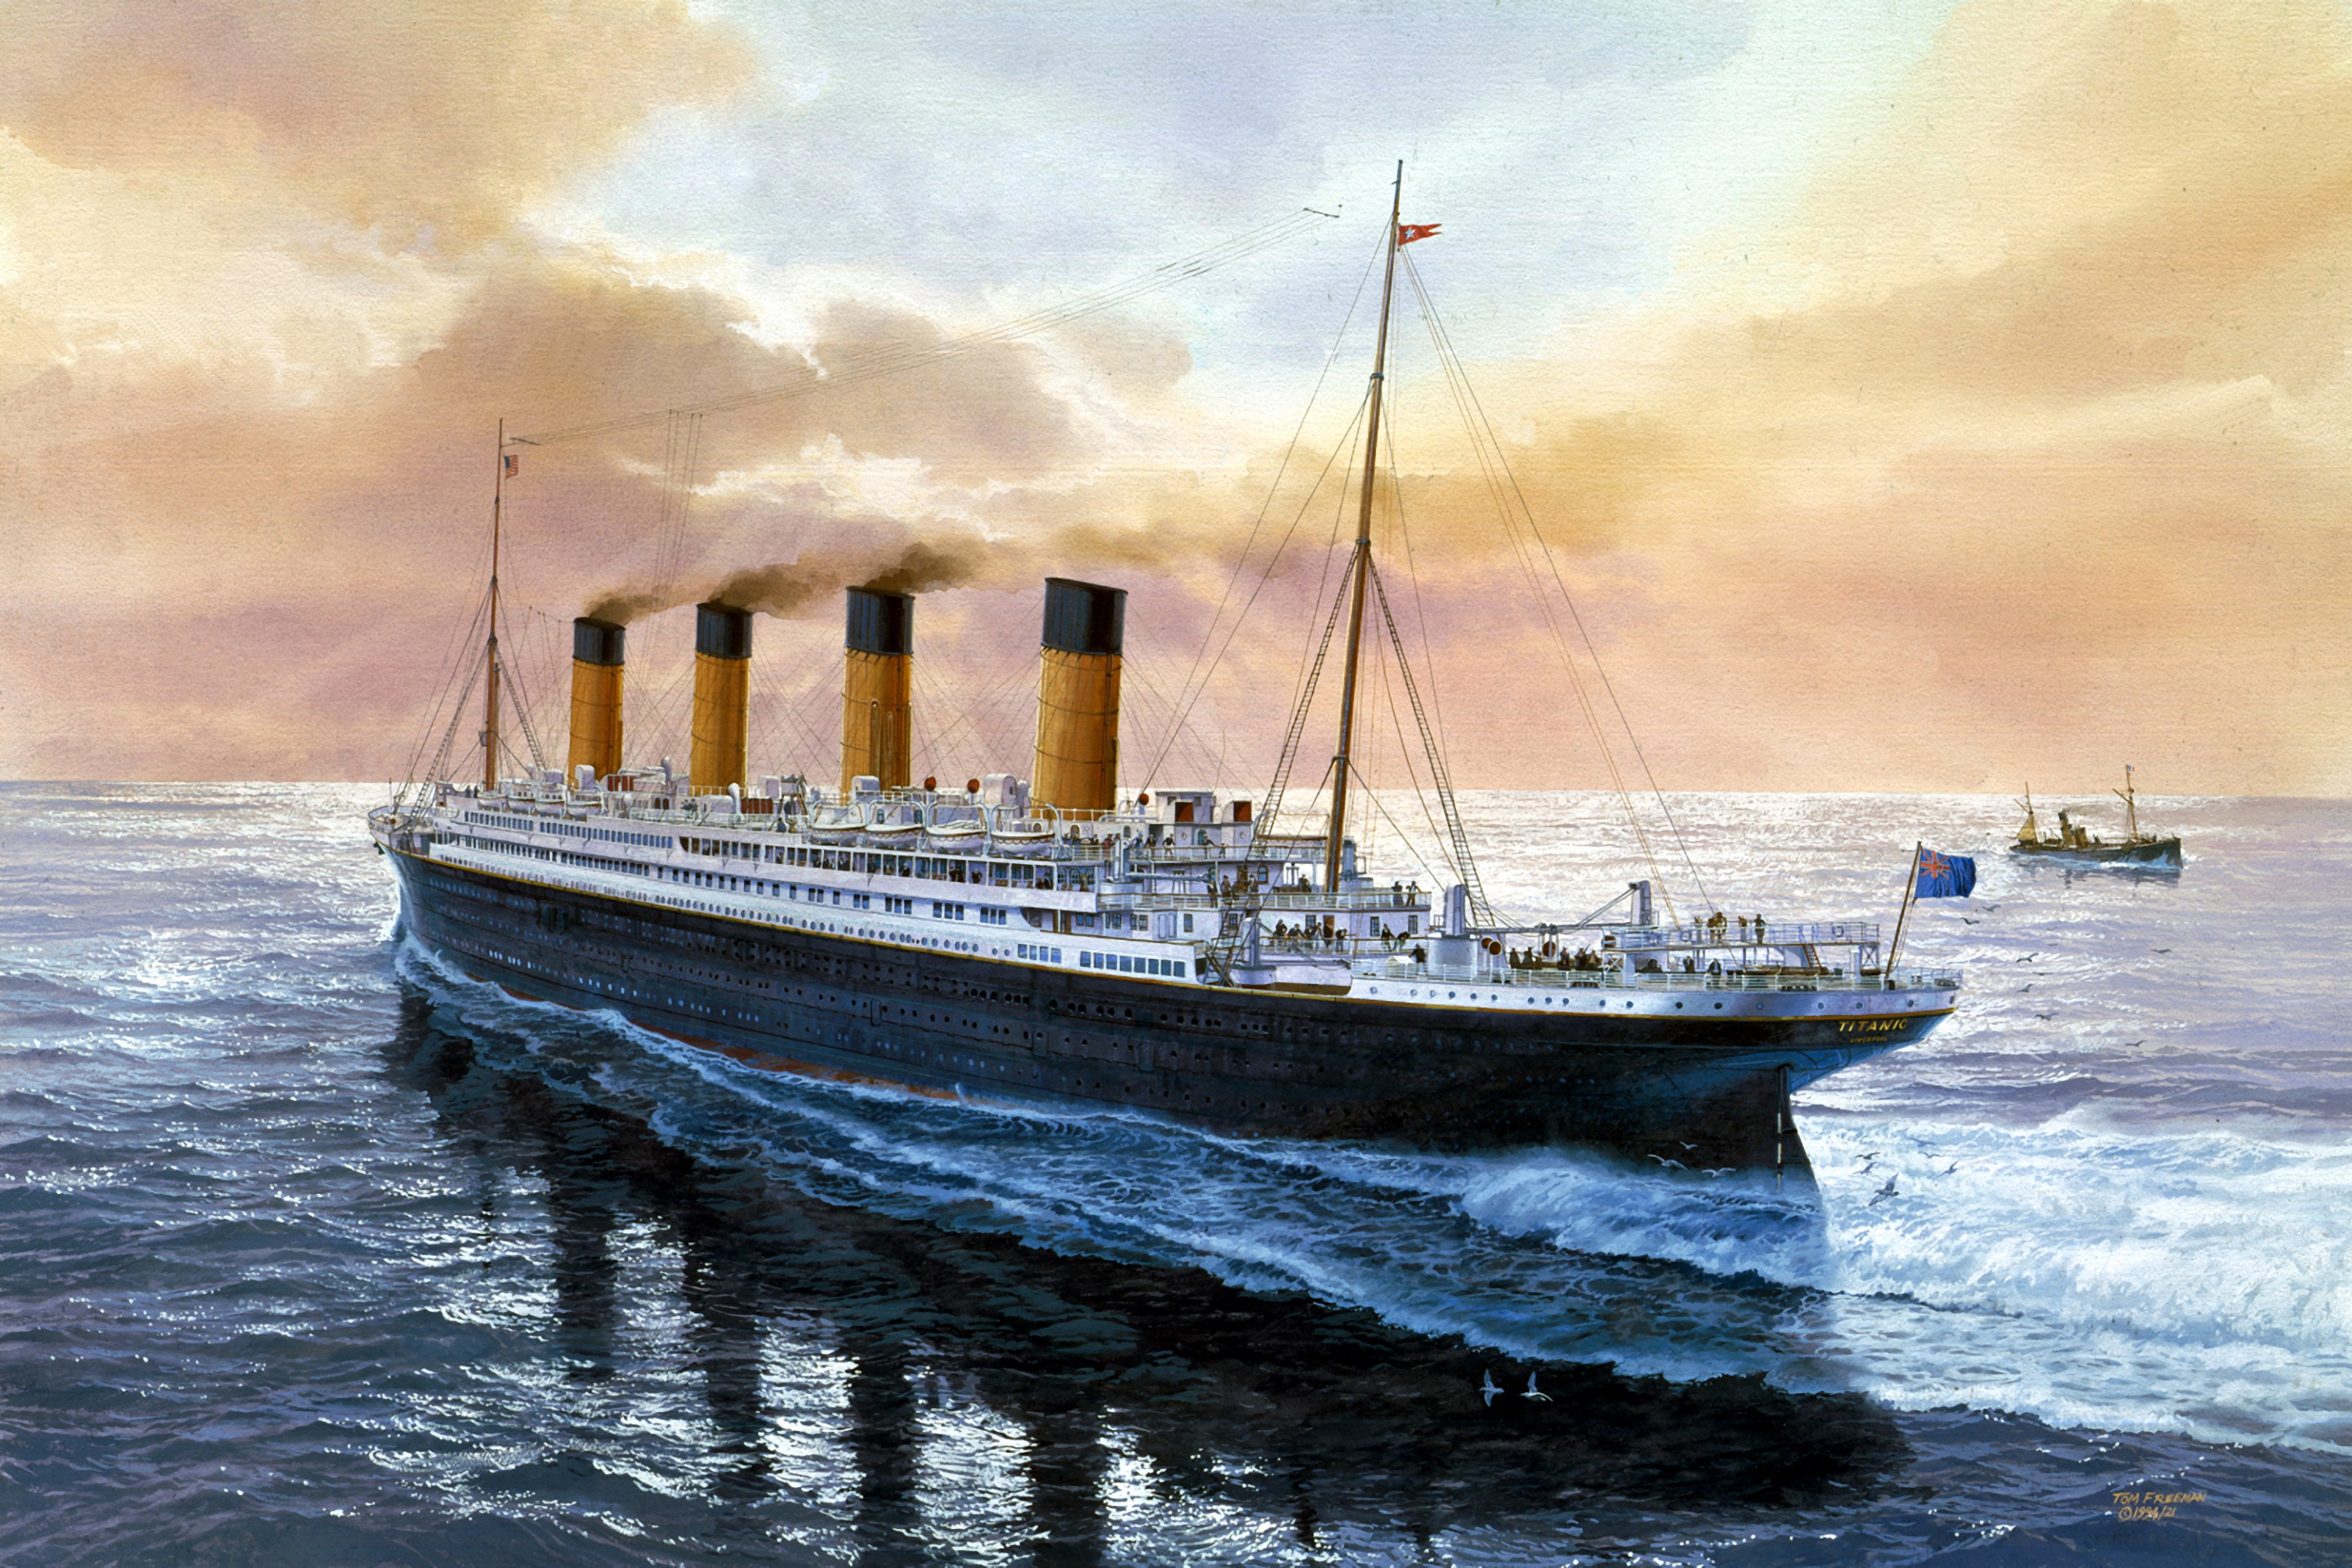 Titanic HD Wallpaper Background